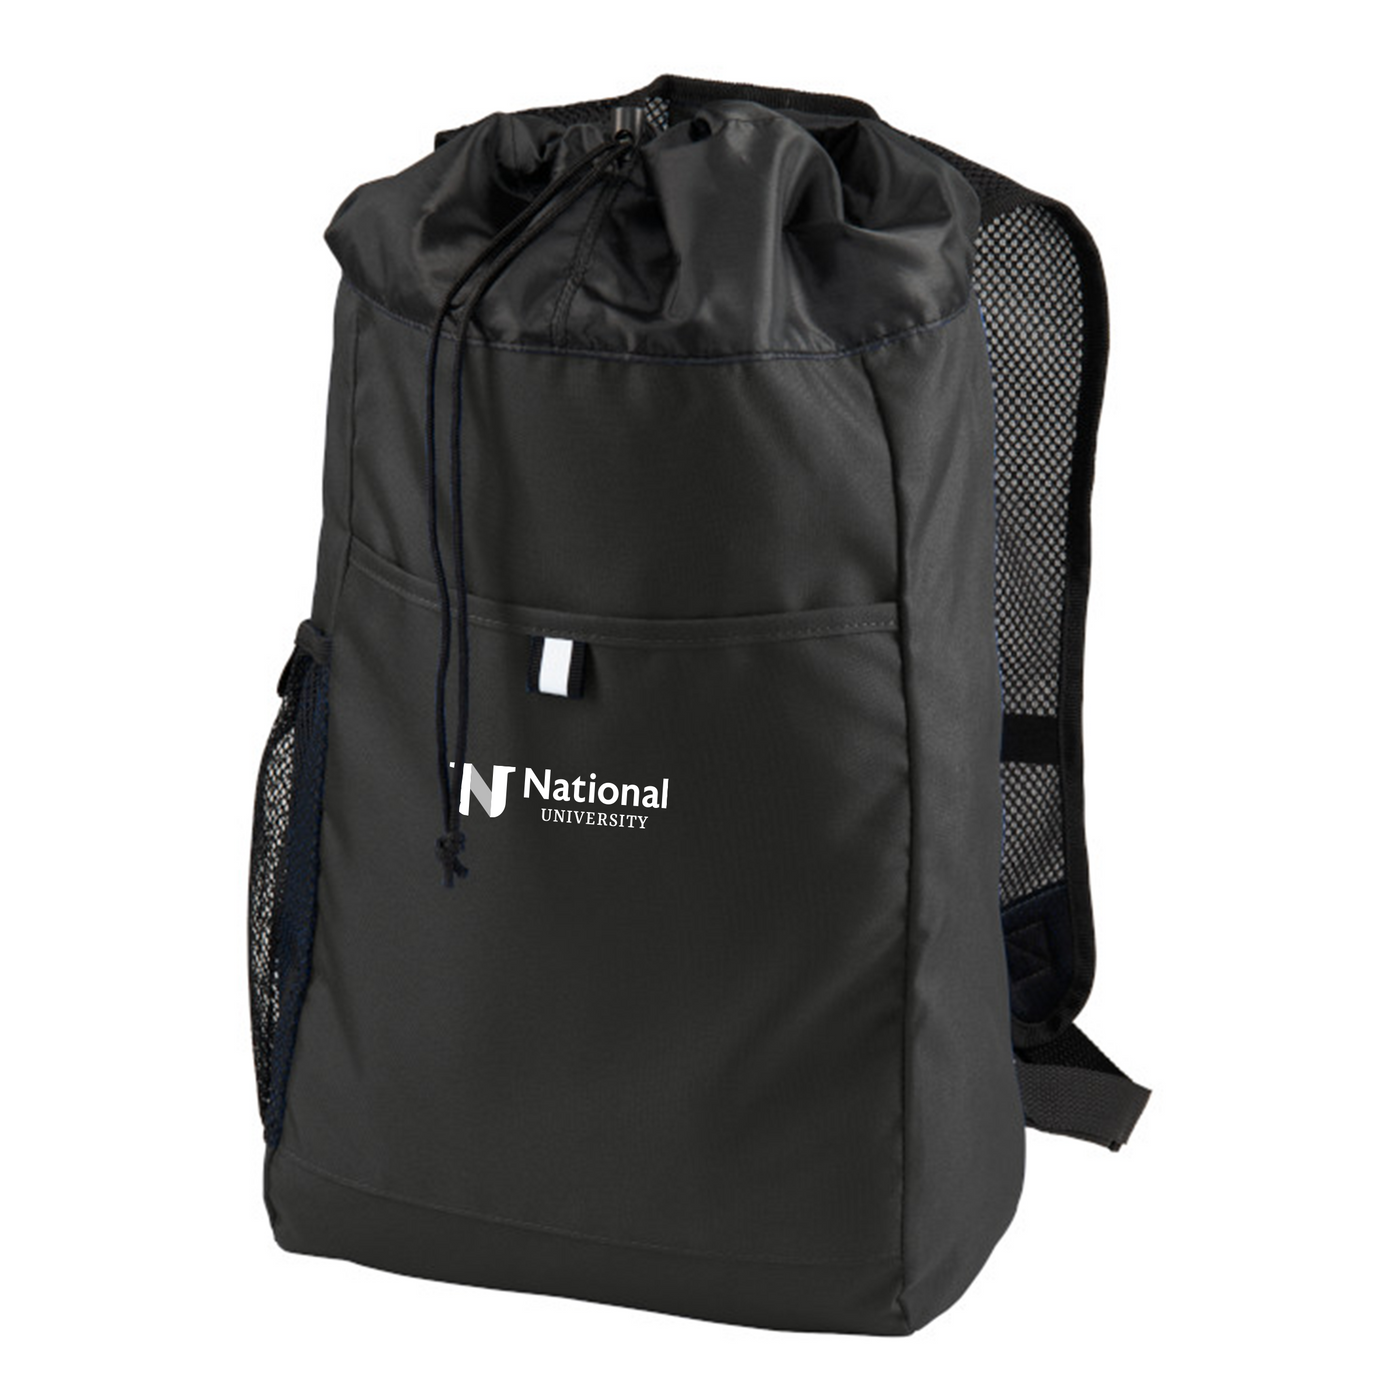 Port Authority ® Hybrid Backpack